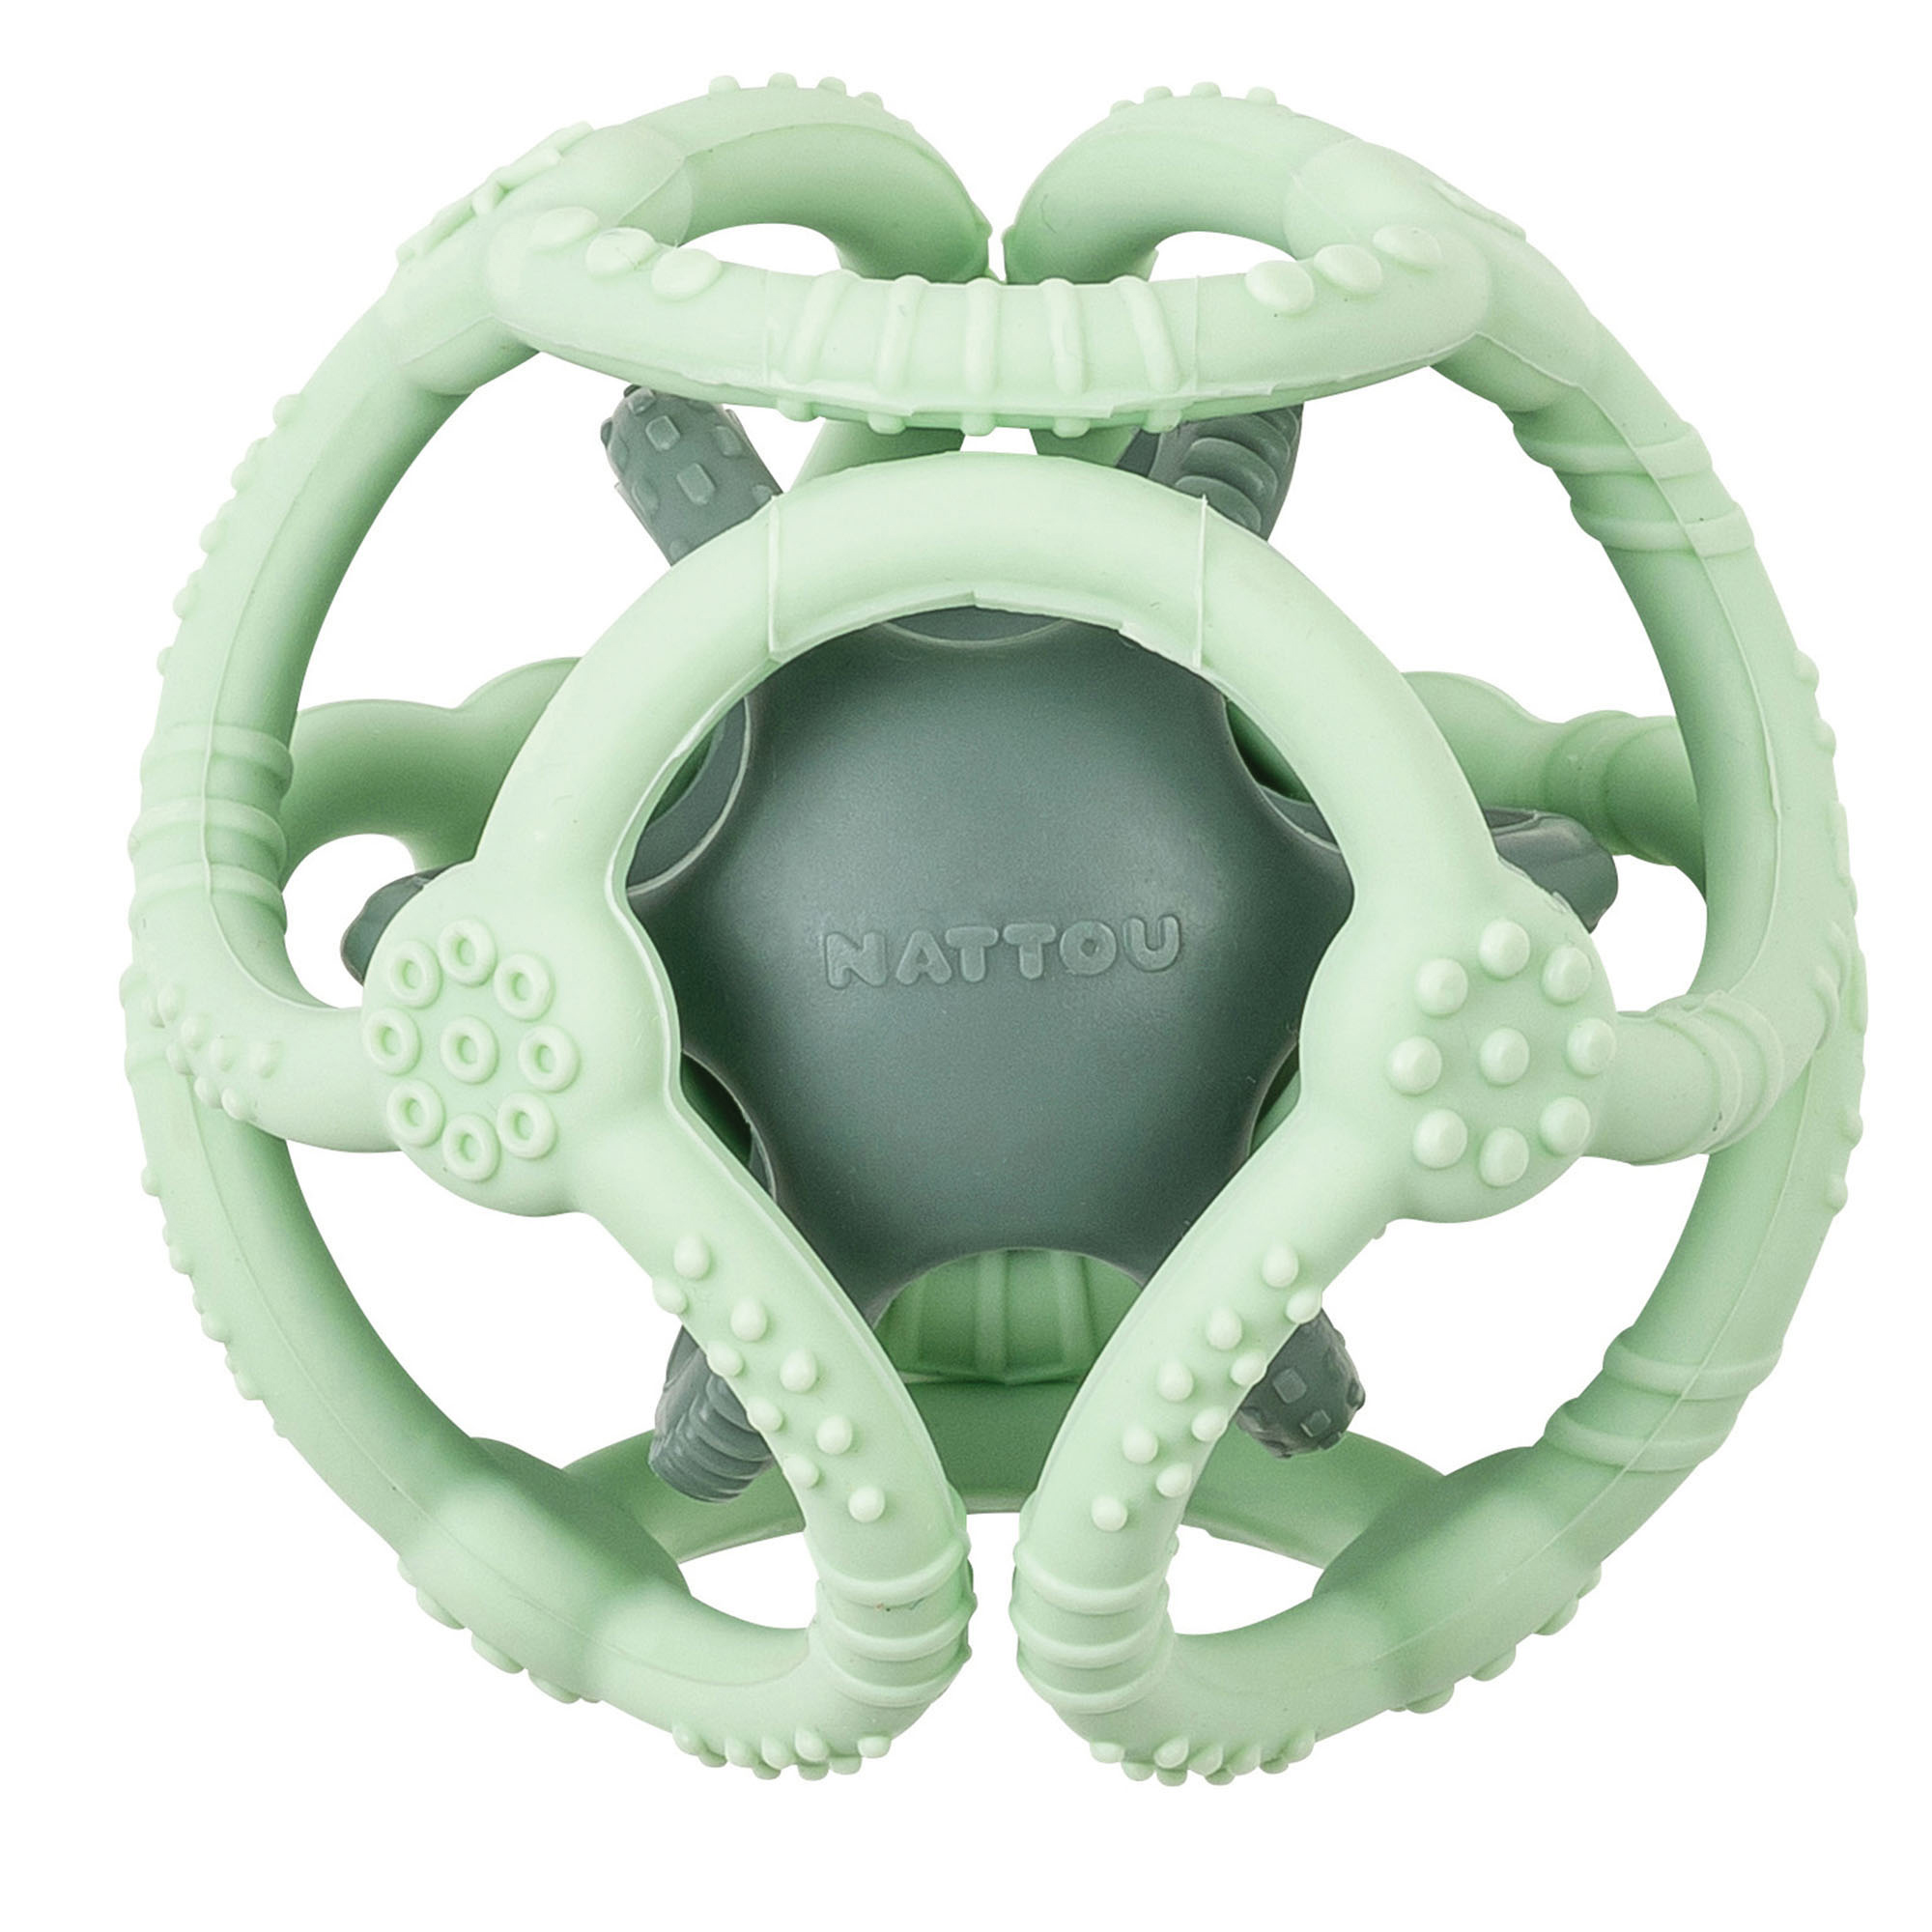 Nattou Soft Silicone Aktivitetsboll Grön 1 set